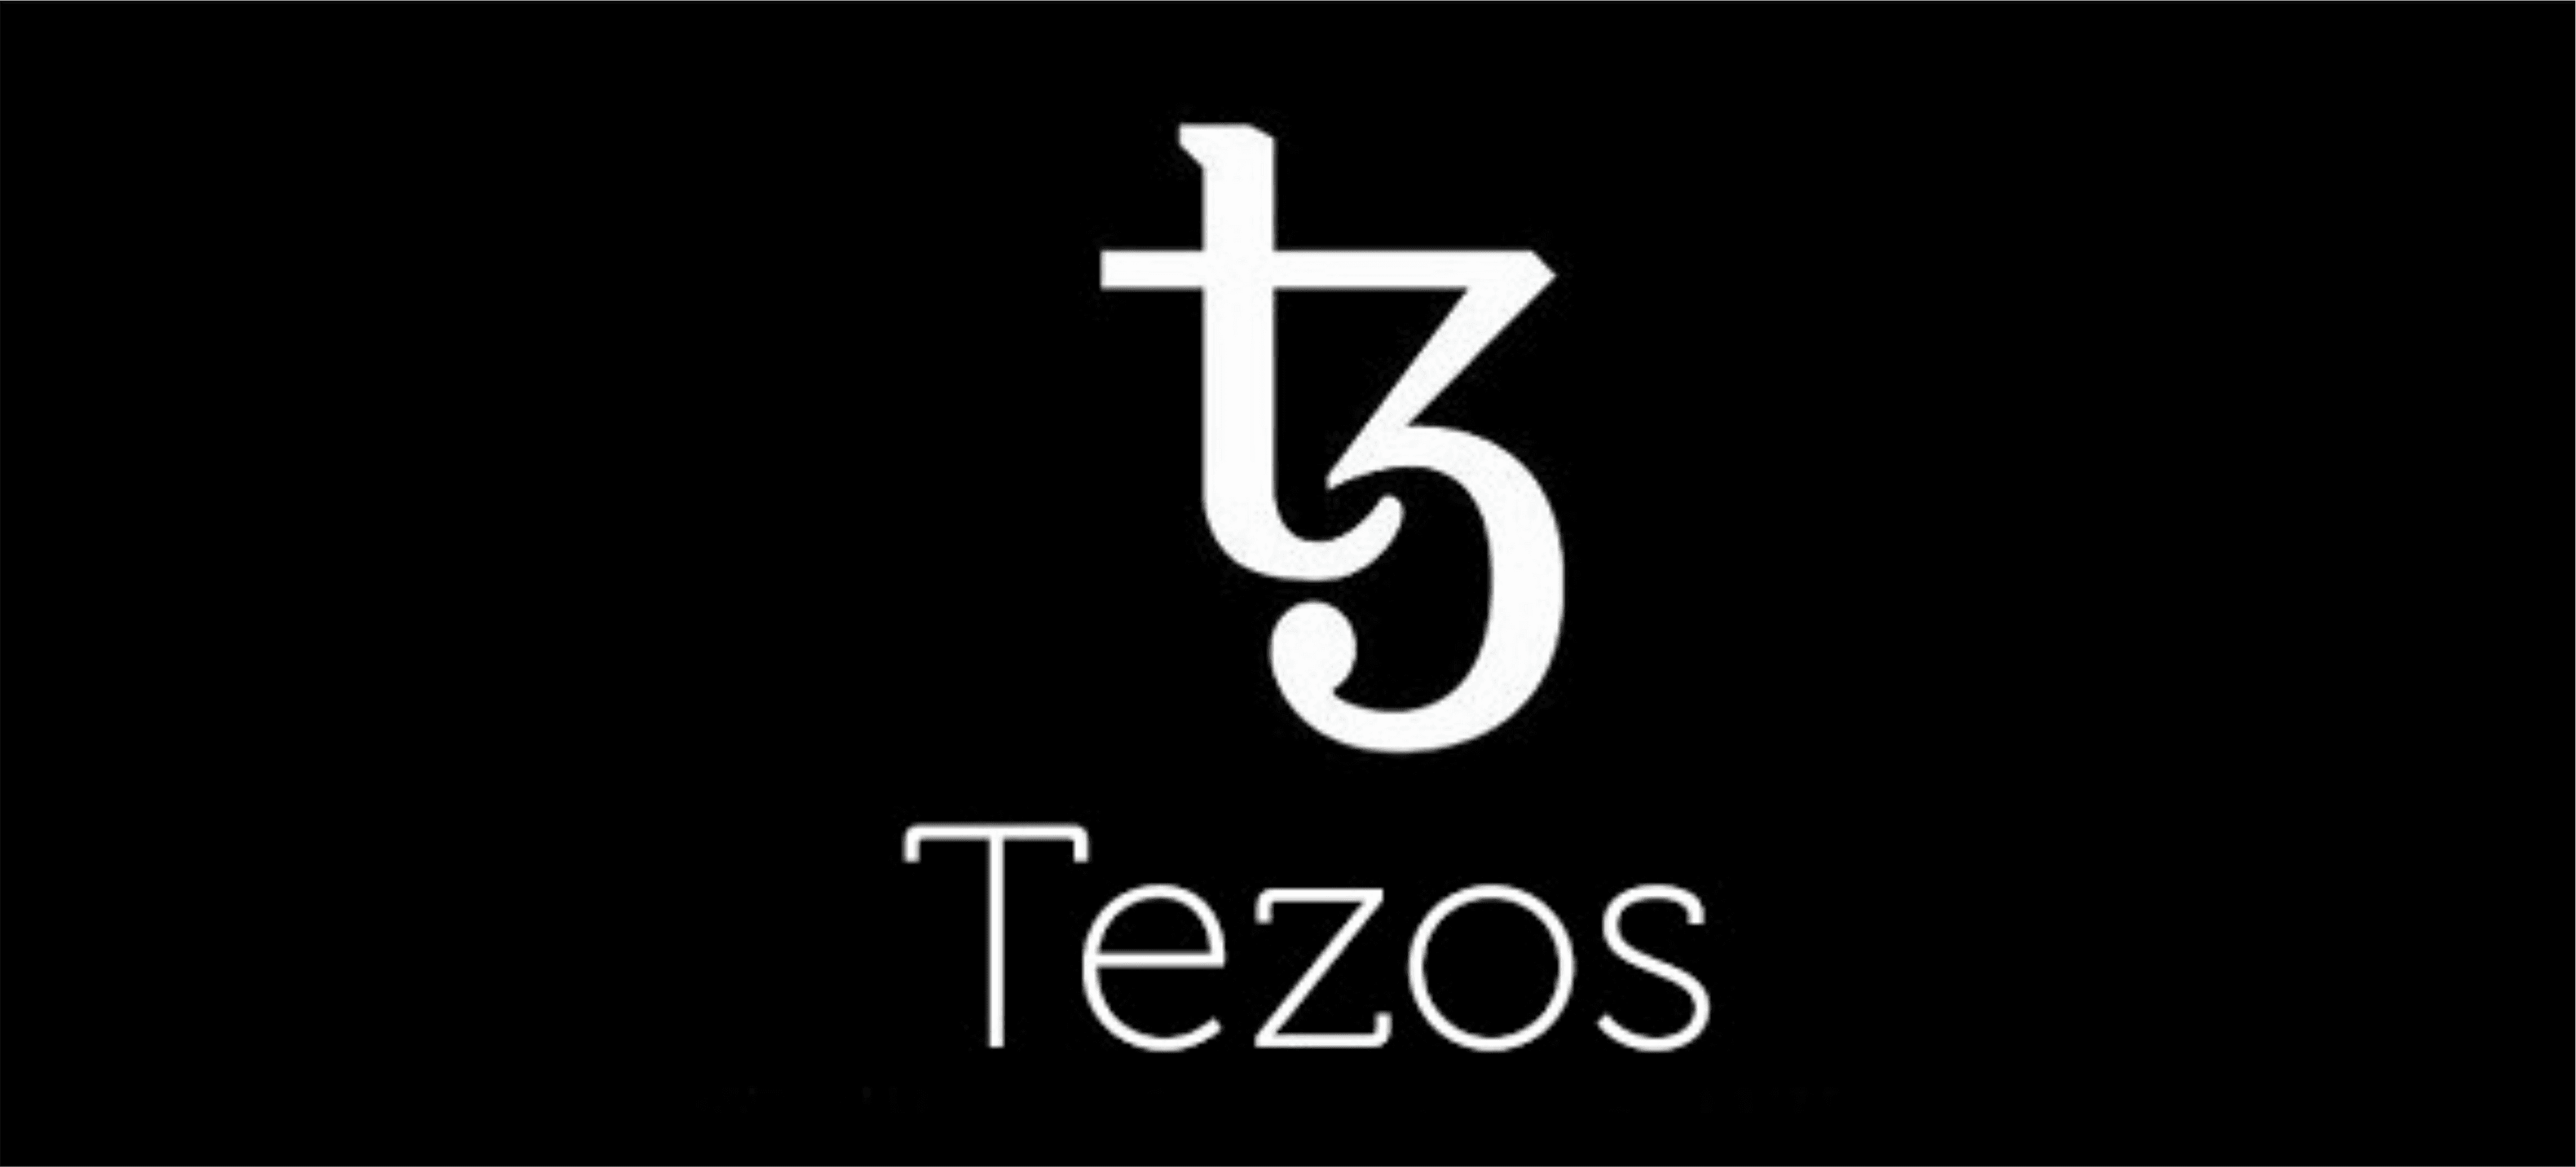 Bitcoin Now a Part of The Tezos Blockchain; TZBTC Token Launched